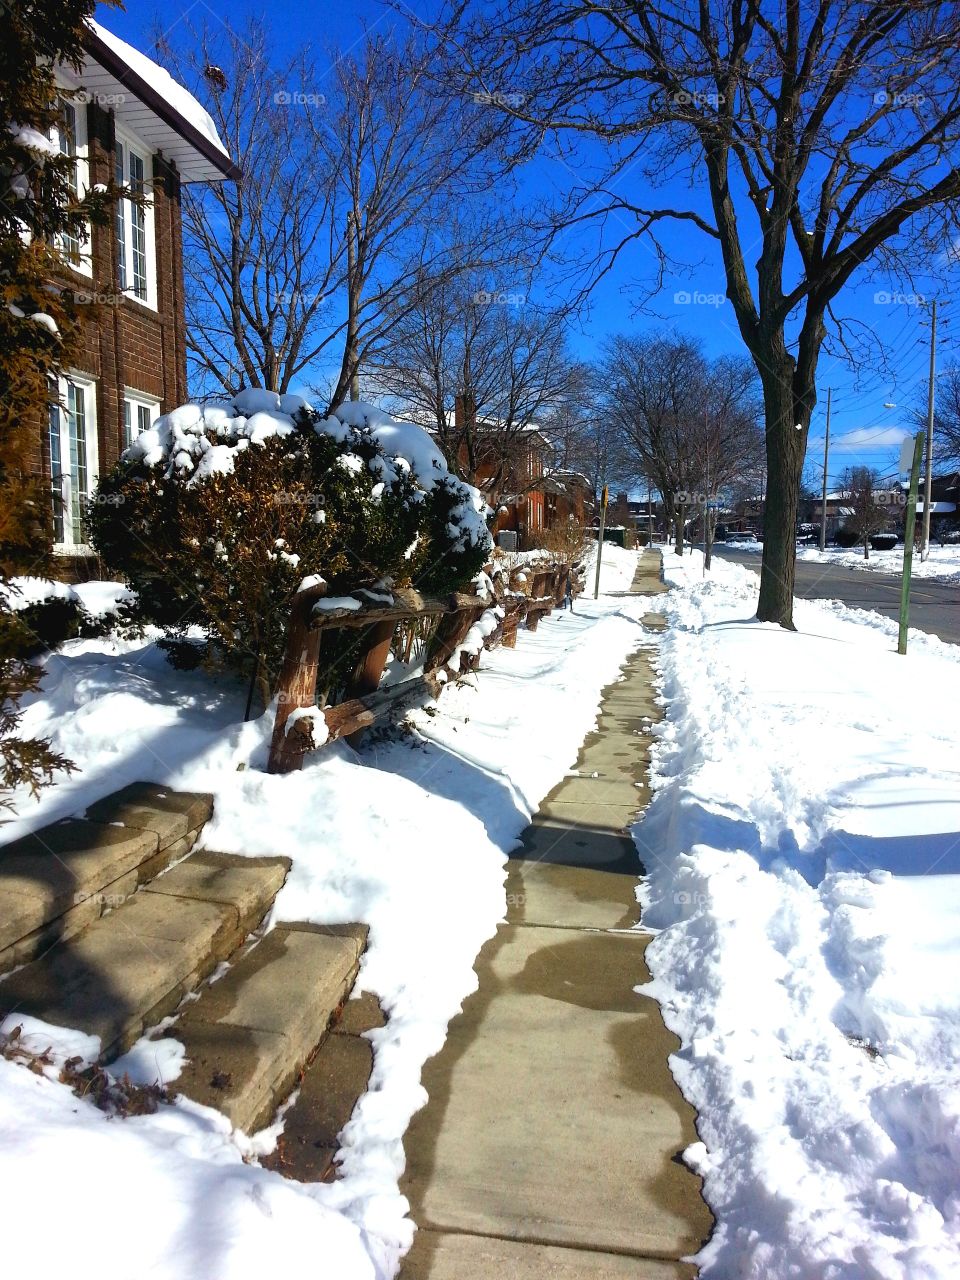 Snowy streets.